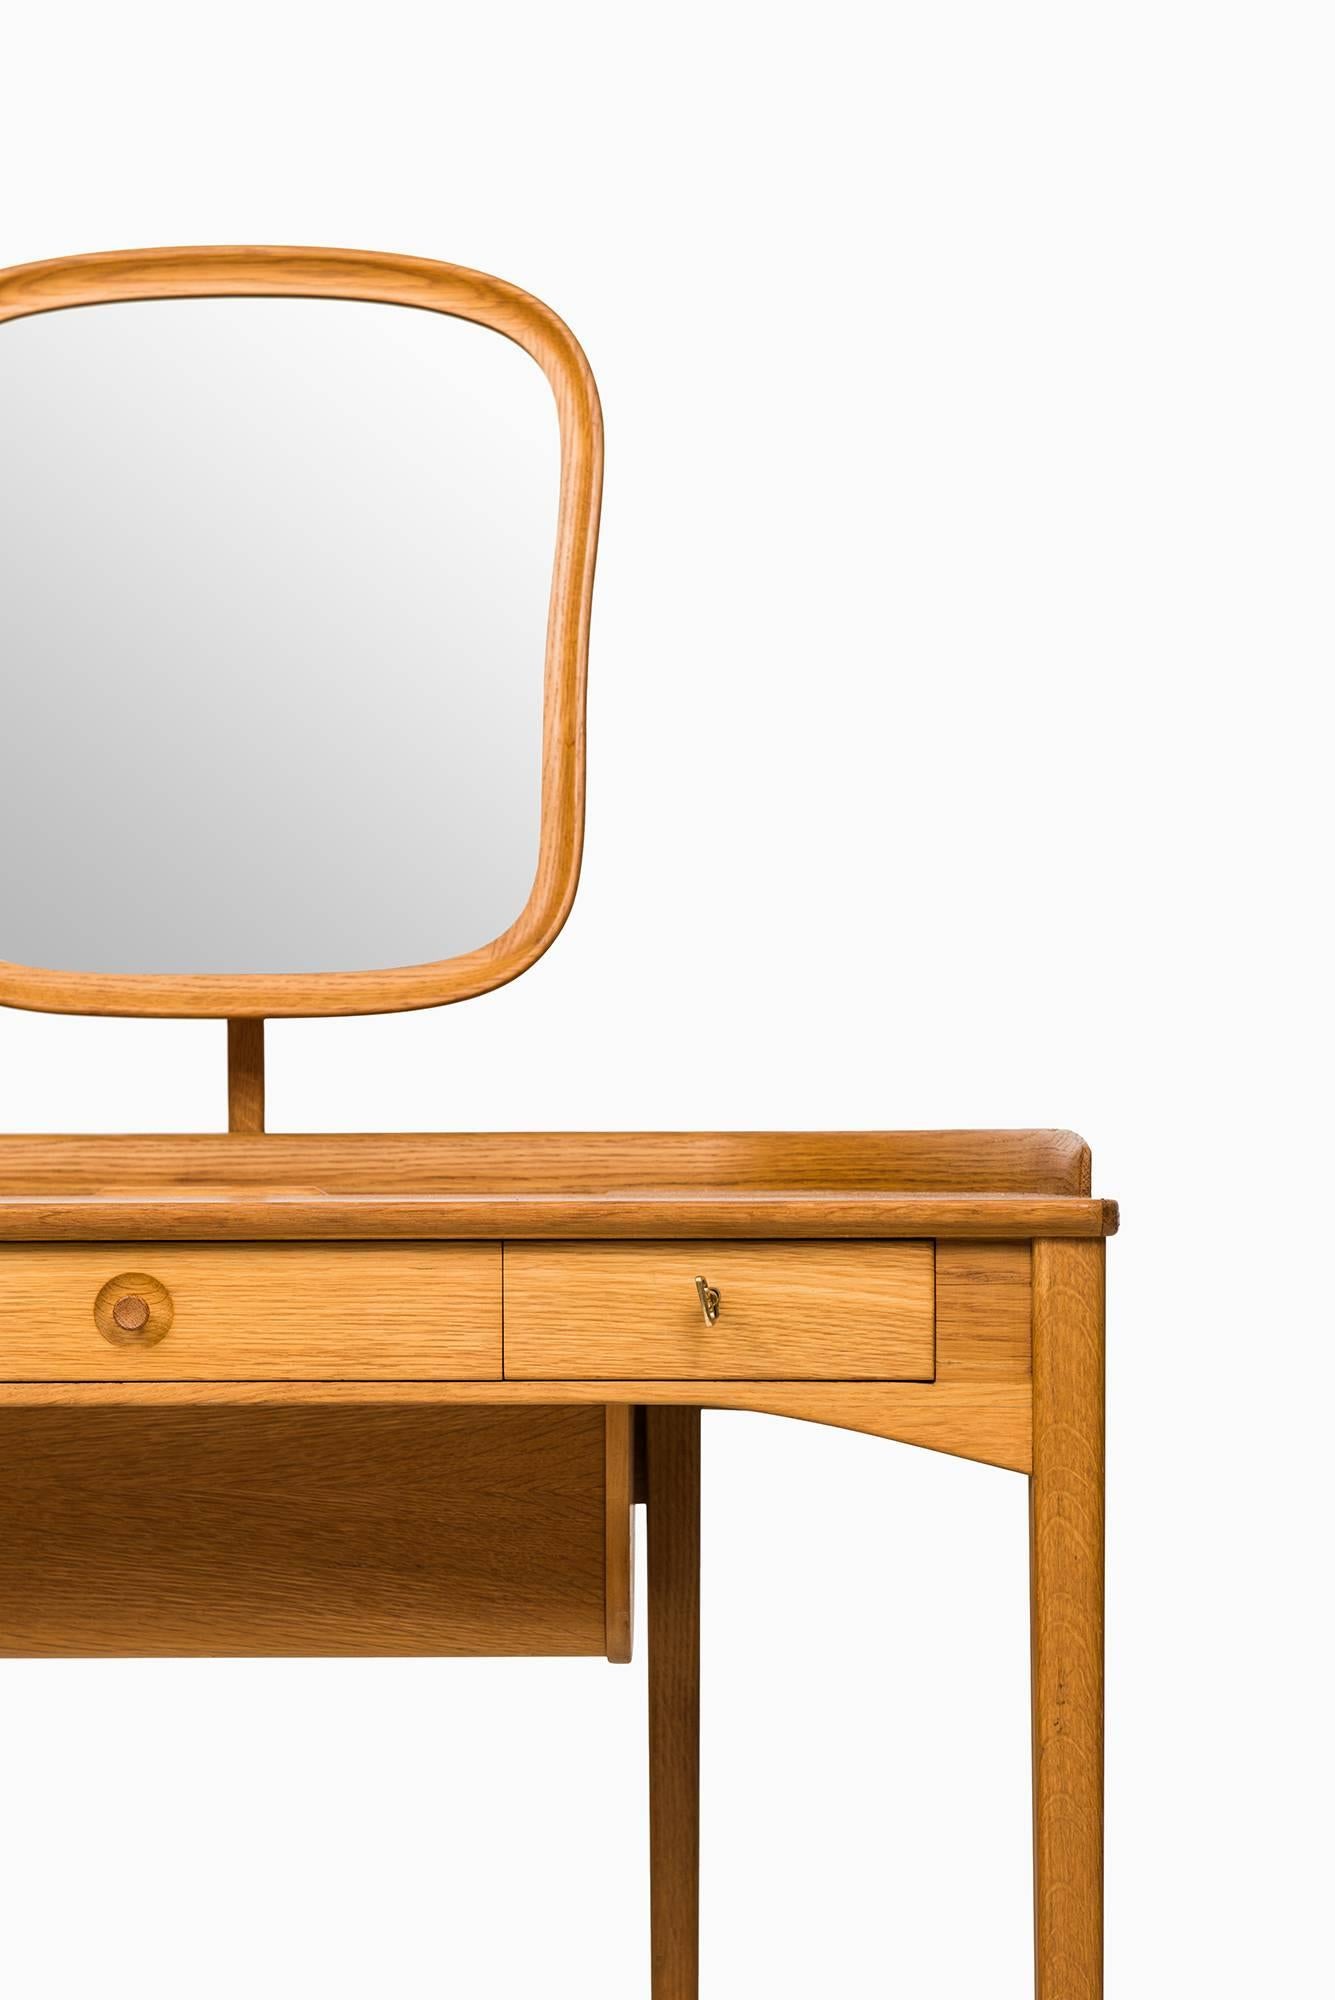 Rare vanity or lady’s desk model Birgitta designed by Carl Malmsten. Produced by Bodafors in Sweden.